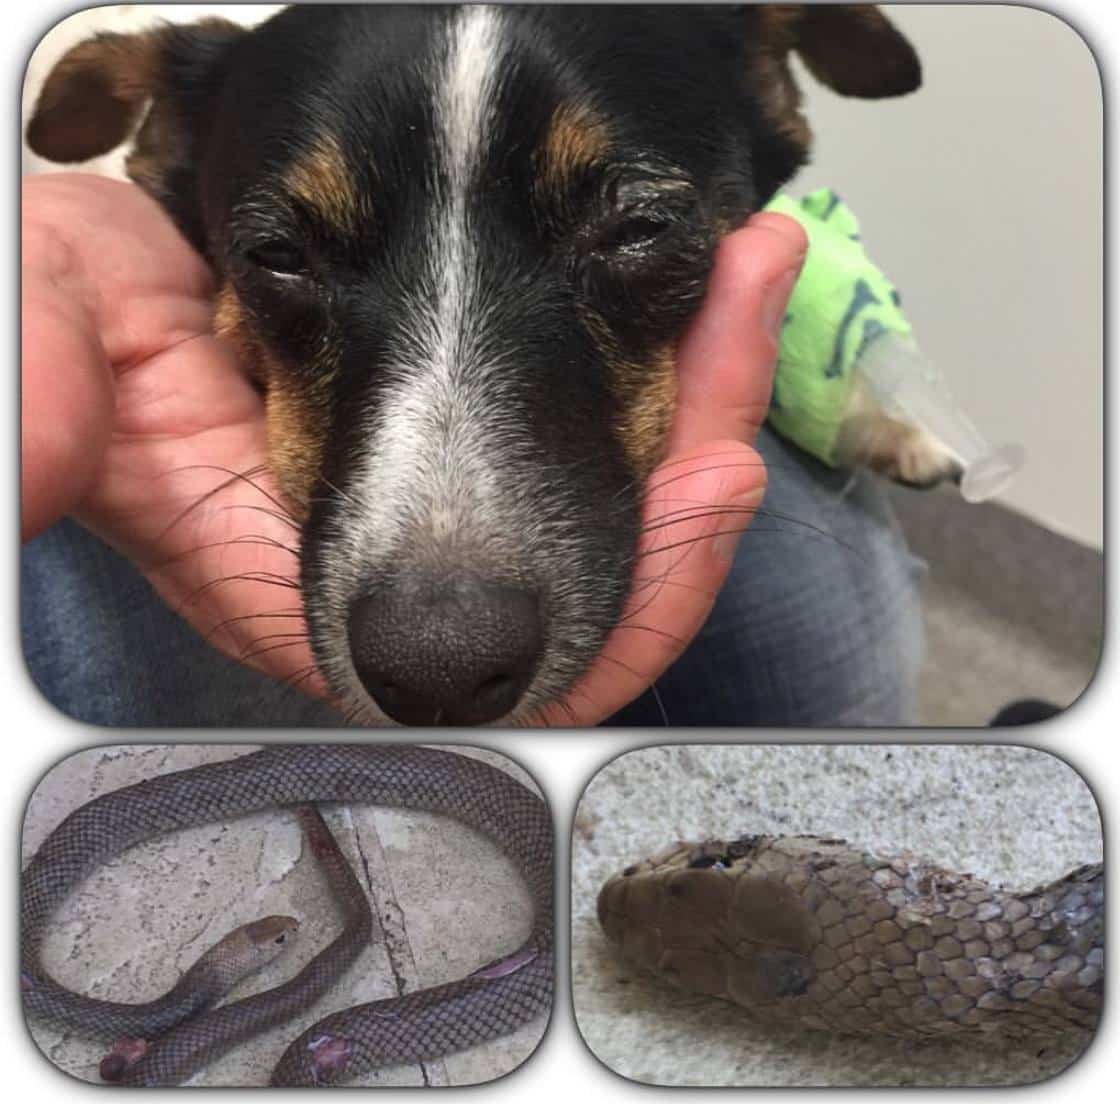 Lee Kernaghan's dog bitten by an Eastern brown snake